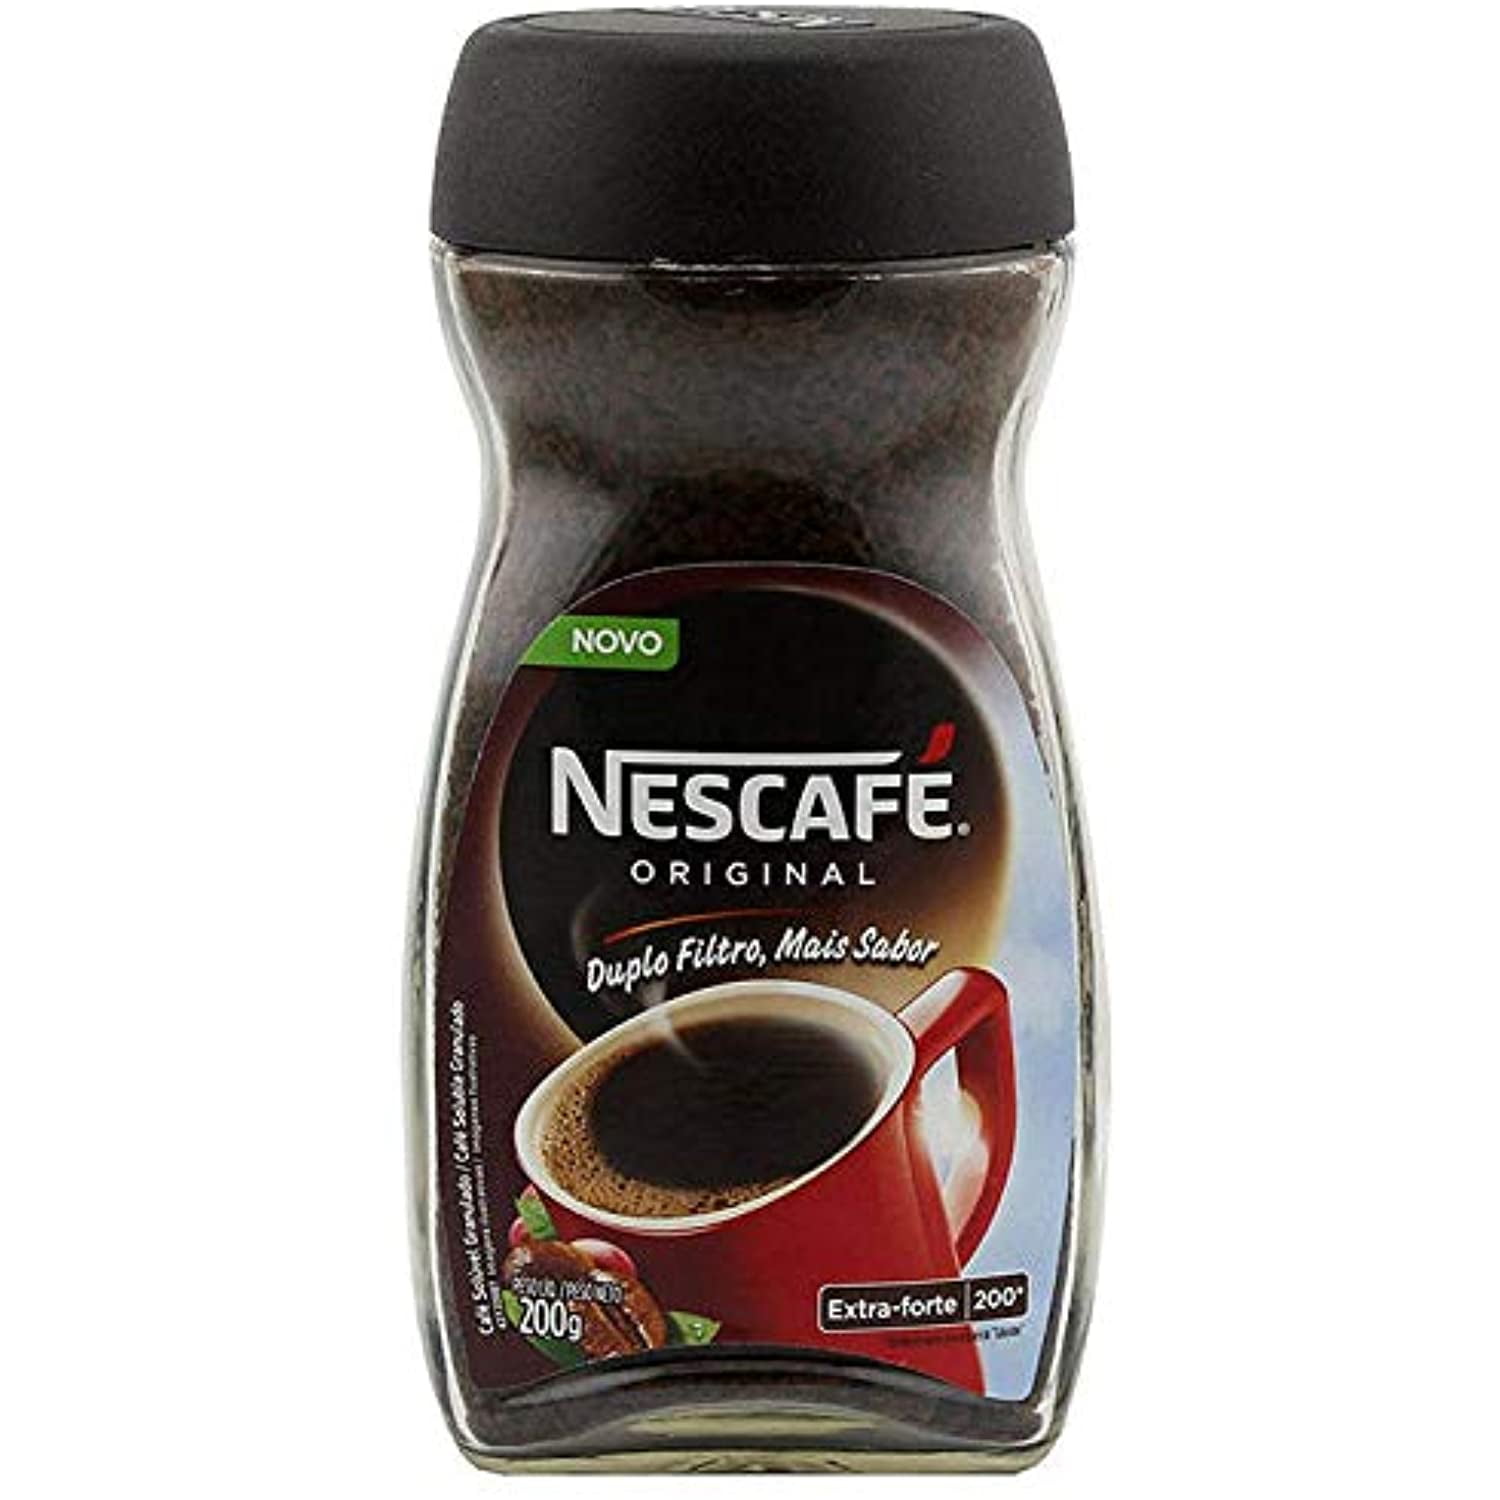 Nescafe Original Mix 2 in 1 - نسكافيه ميكس 2 في 1 أوريجينال –